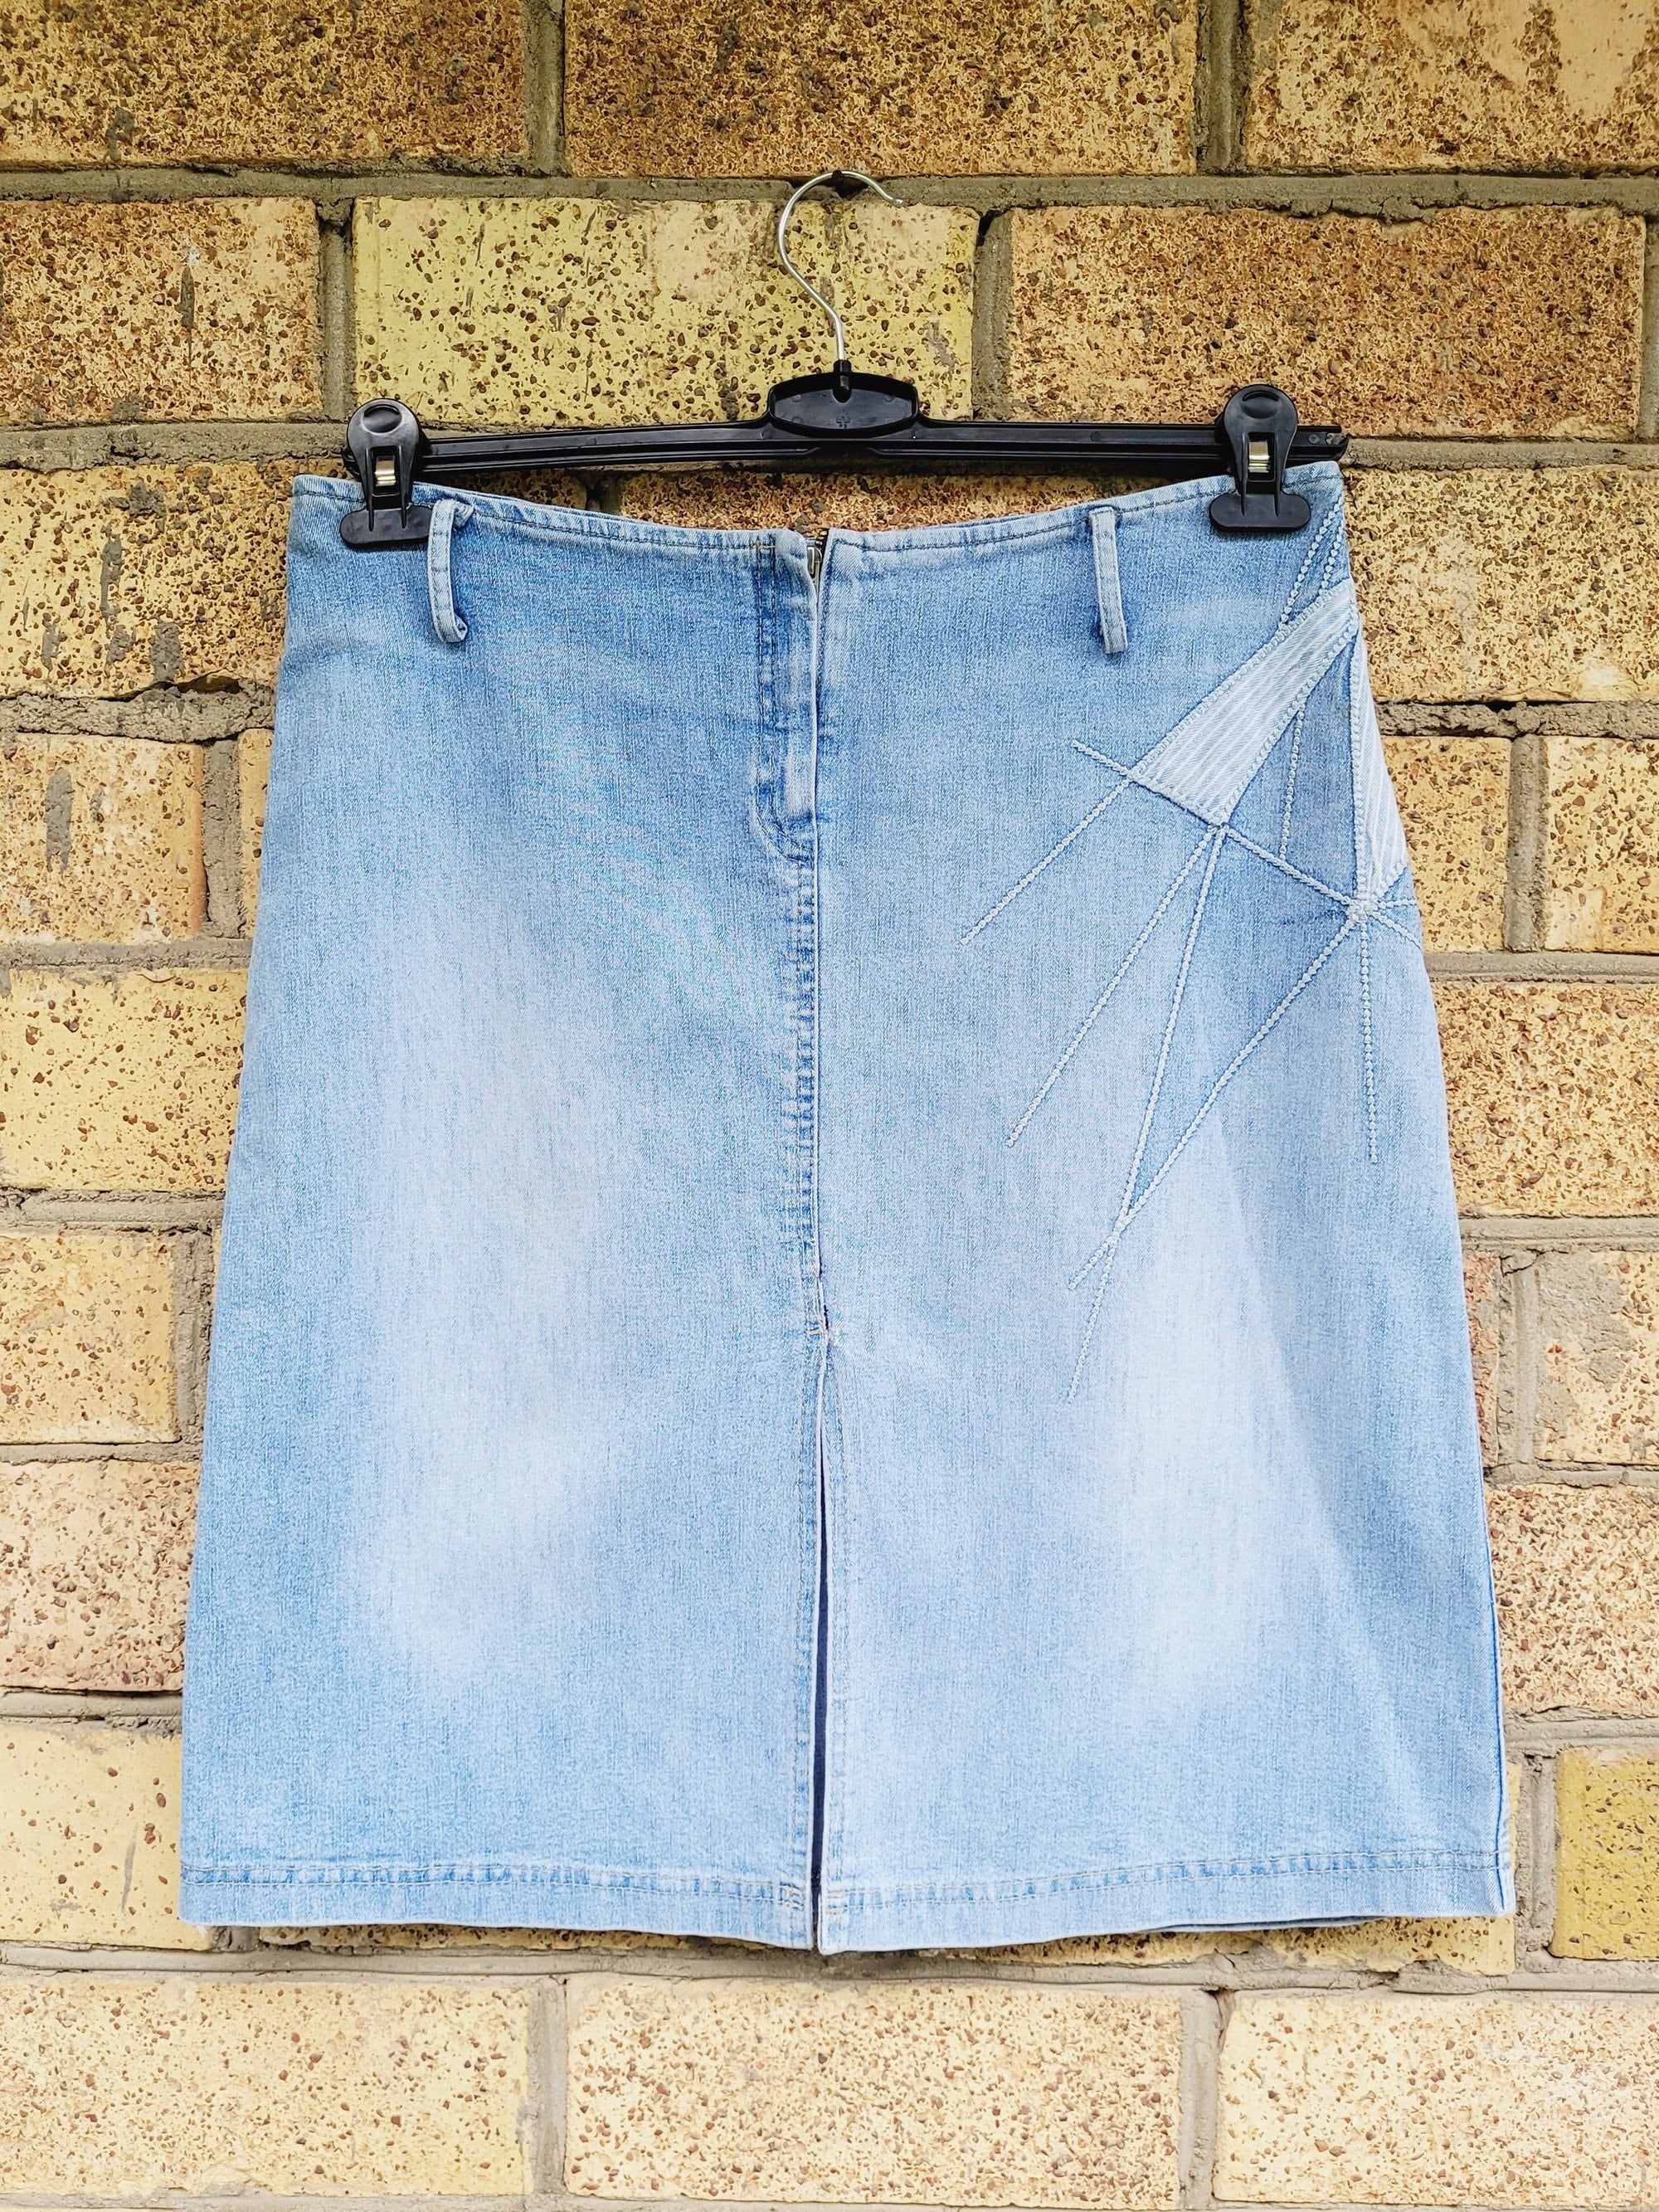 Retro 90s light blue denim jeans Western midi pencil skirt